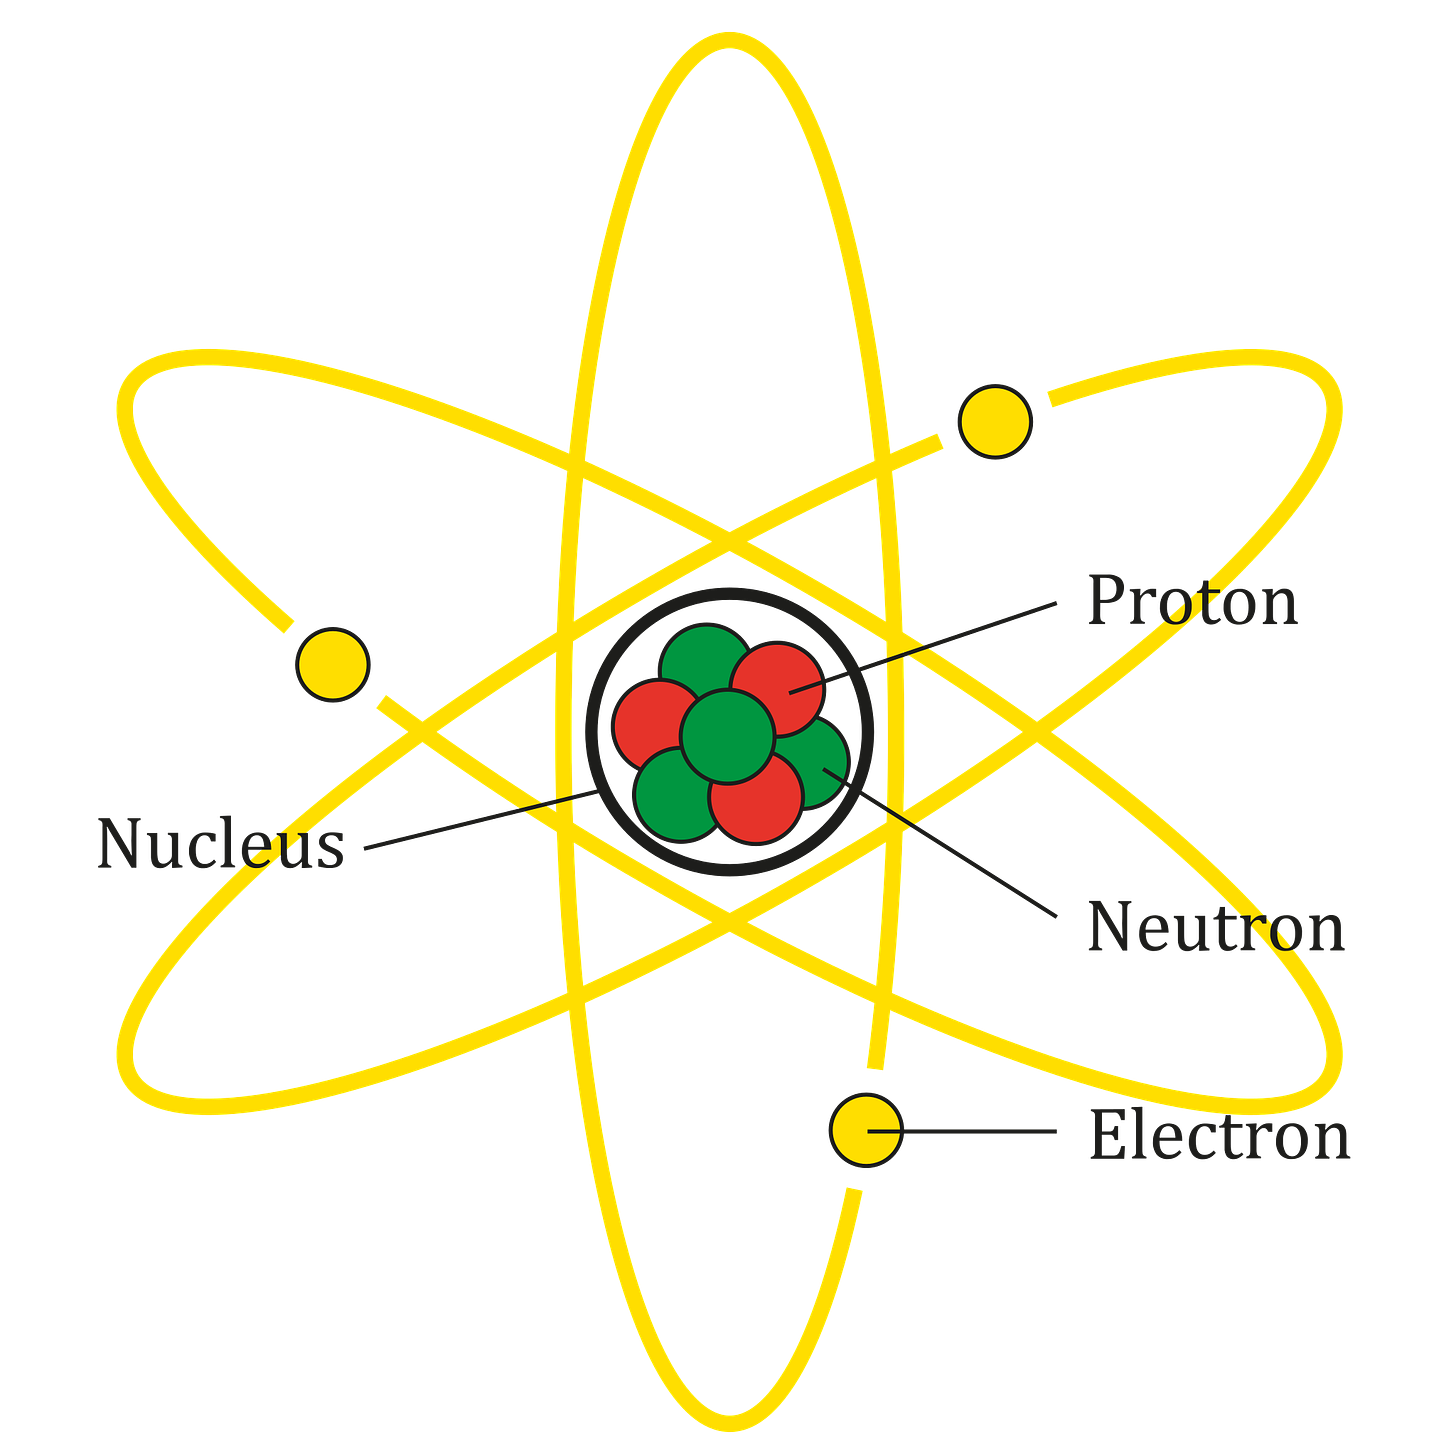 File:Atom Diagram.svg - Wikimedia Commons